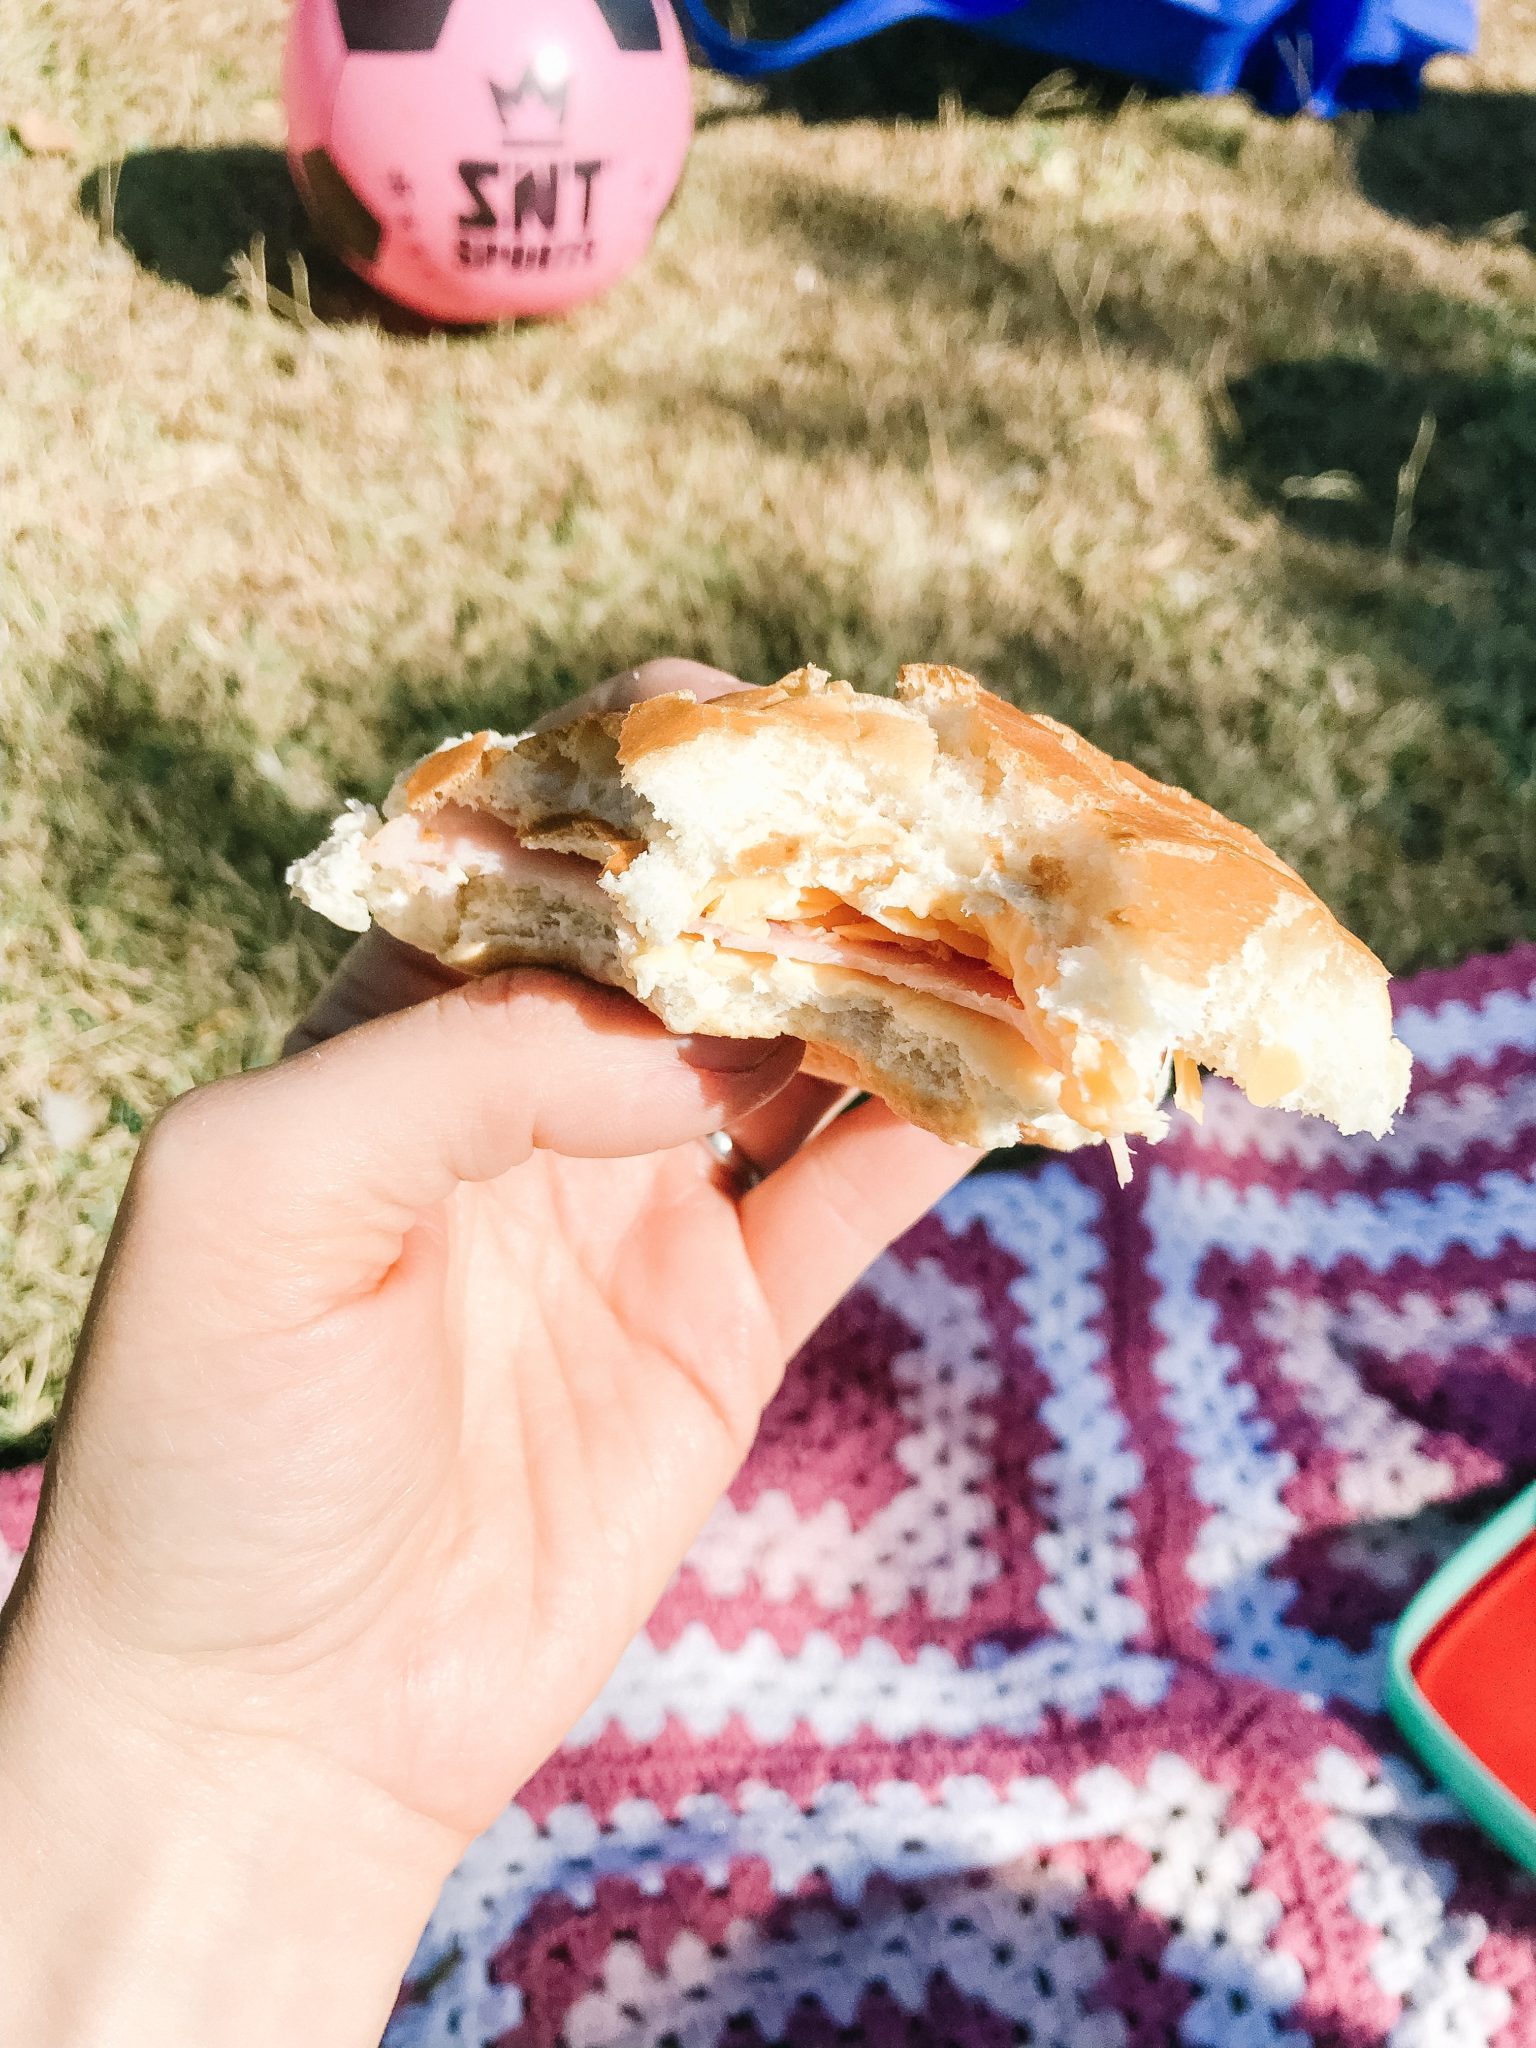 Bread buns for a picnic snack